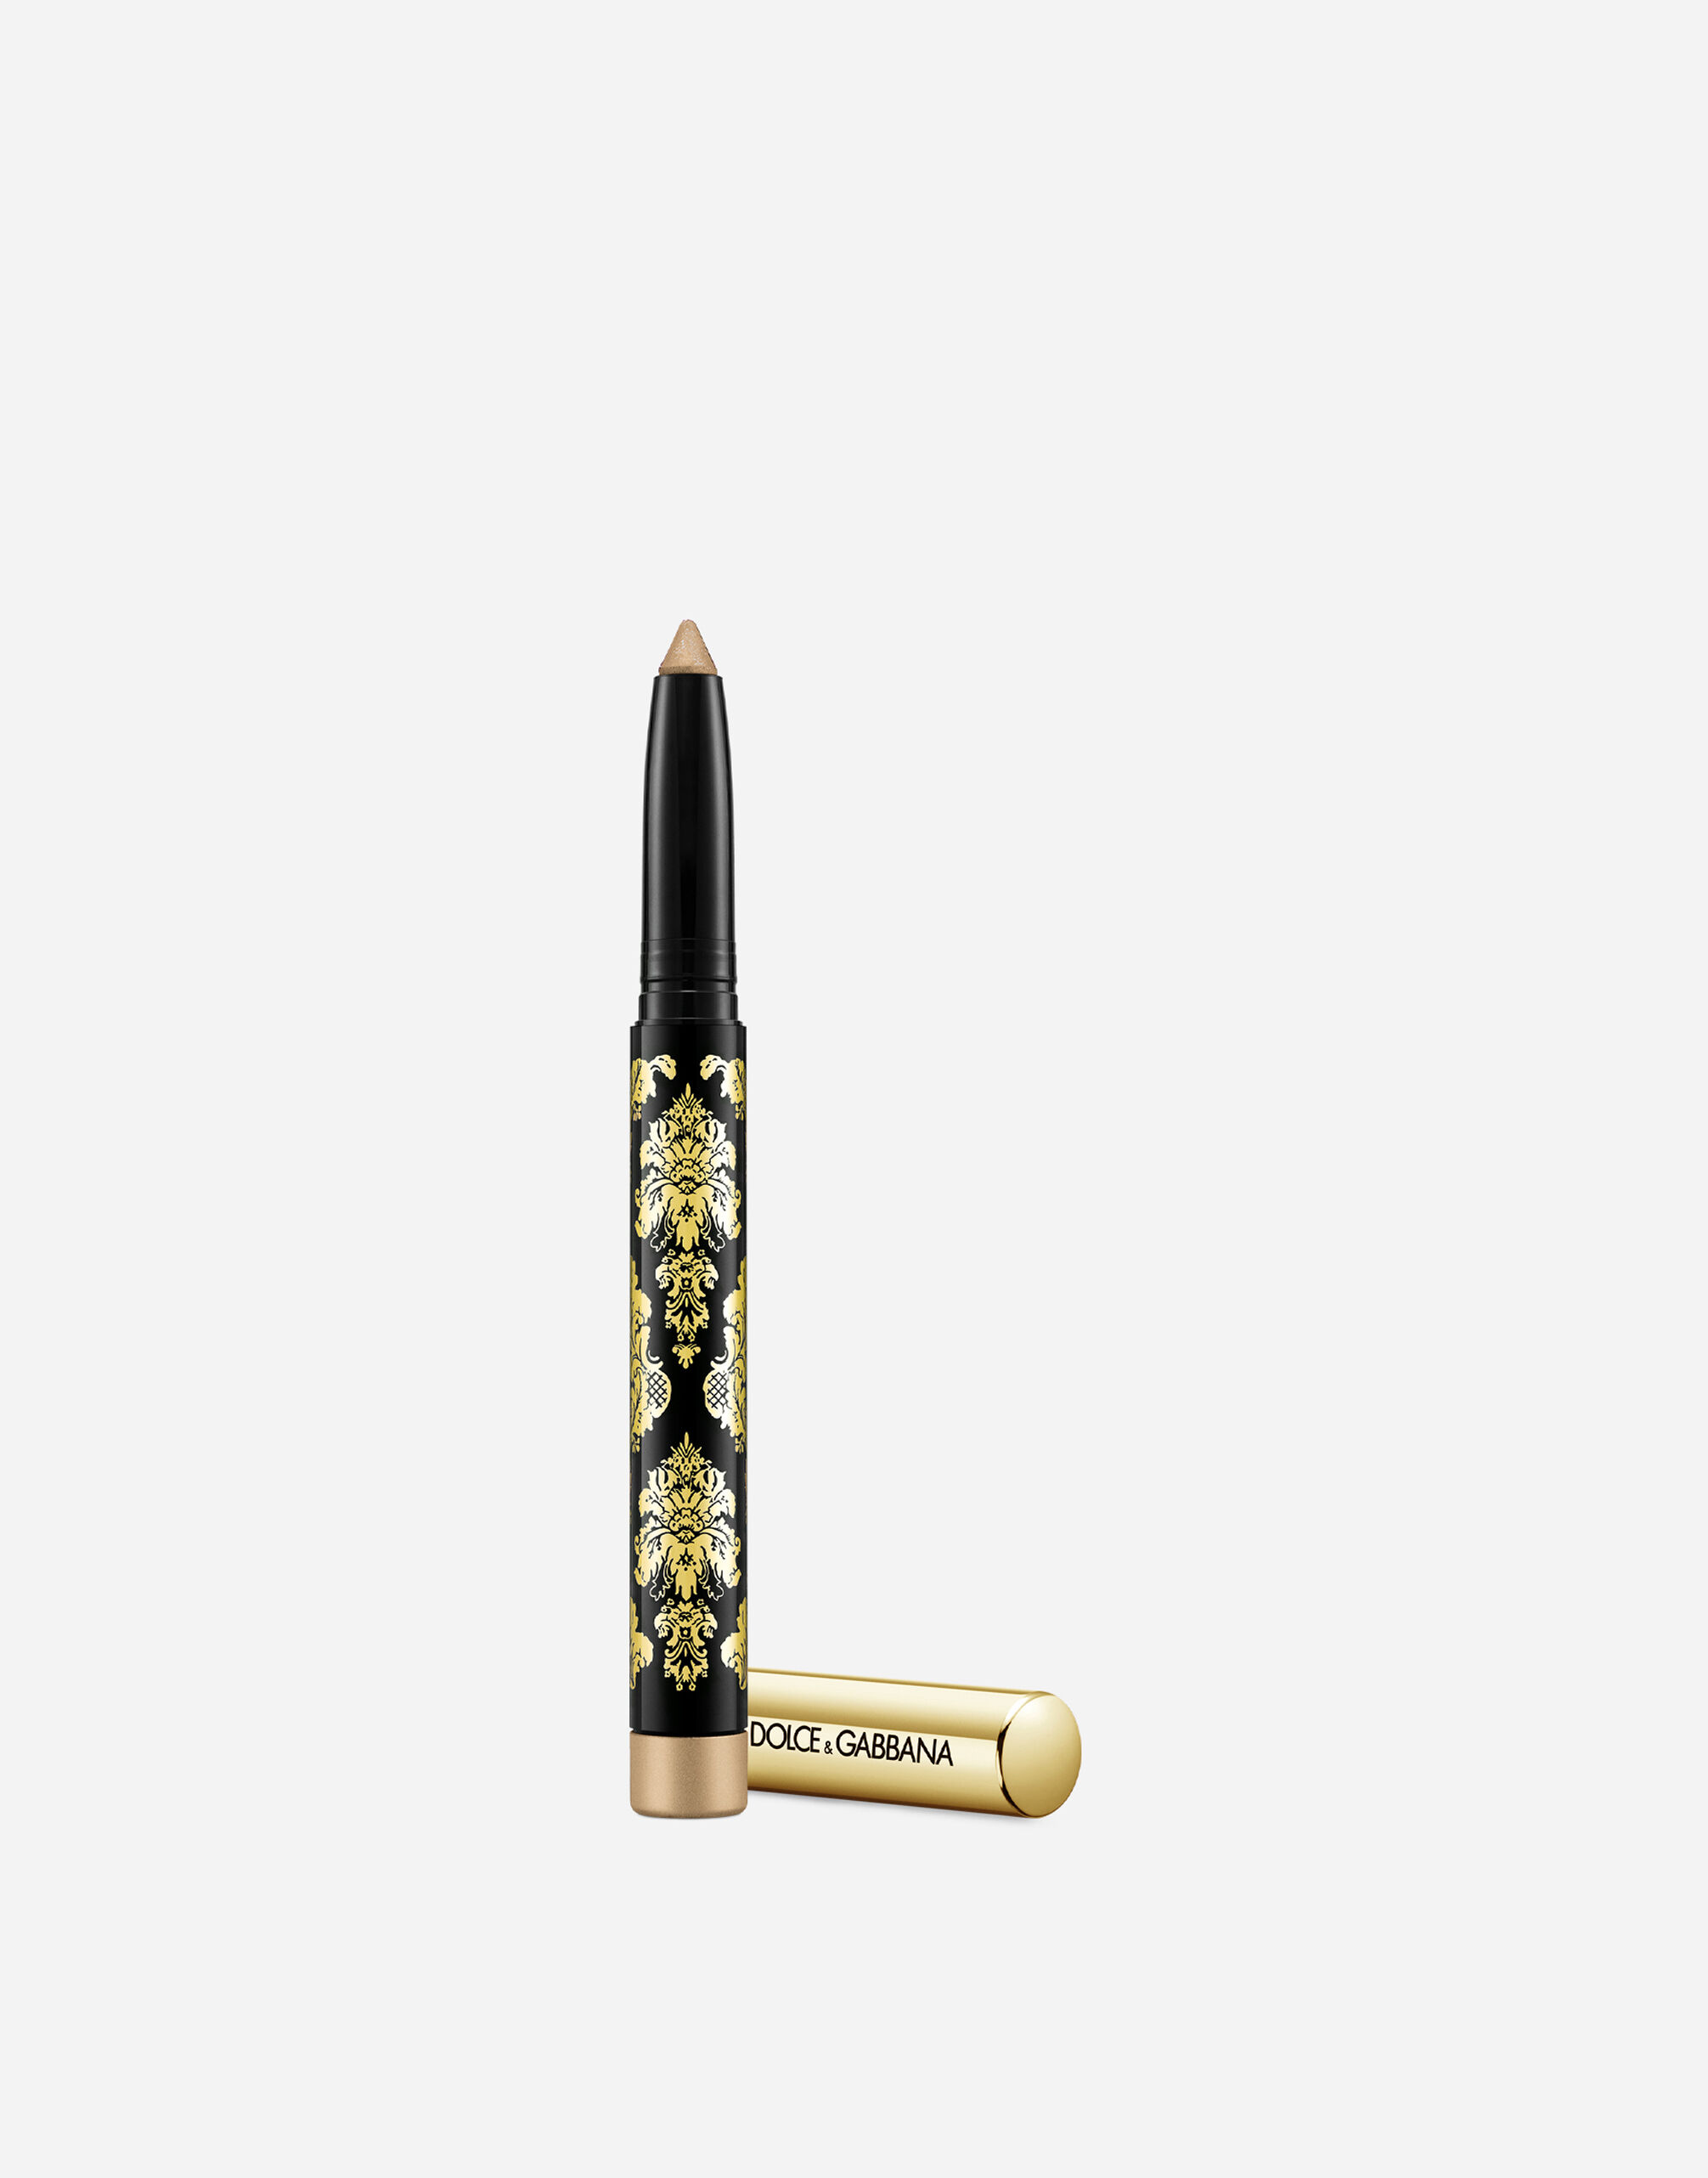 Тени-карандаш для глаз Dolce & Gabbana Intenseyes кремовые, №5 Taupe, 1,4 г тени карандаш для глаз dolce